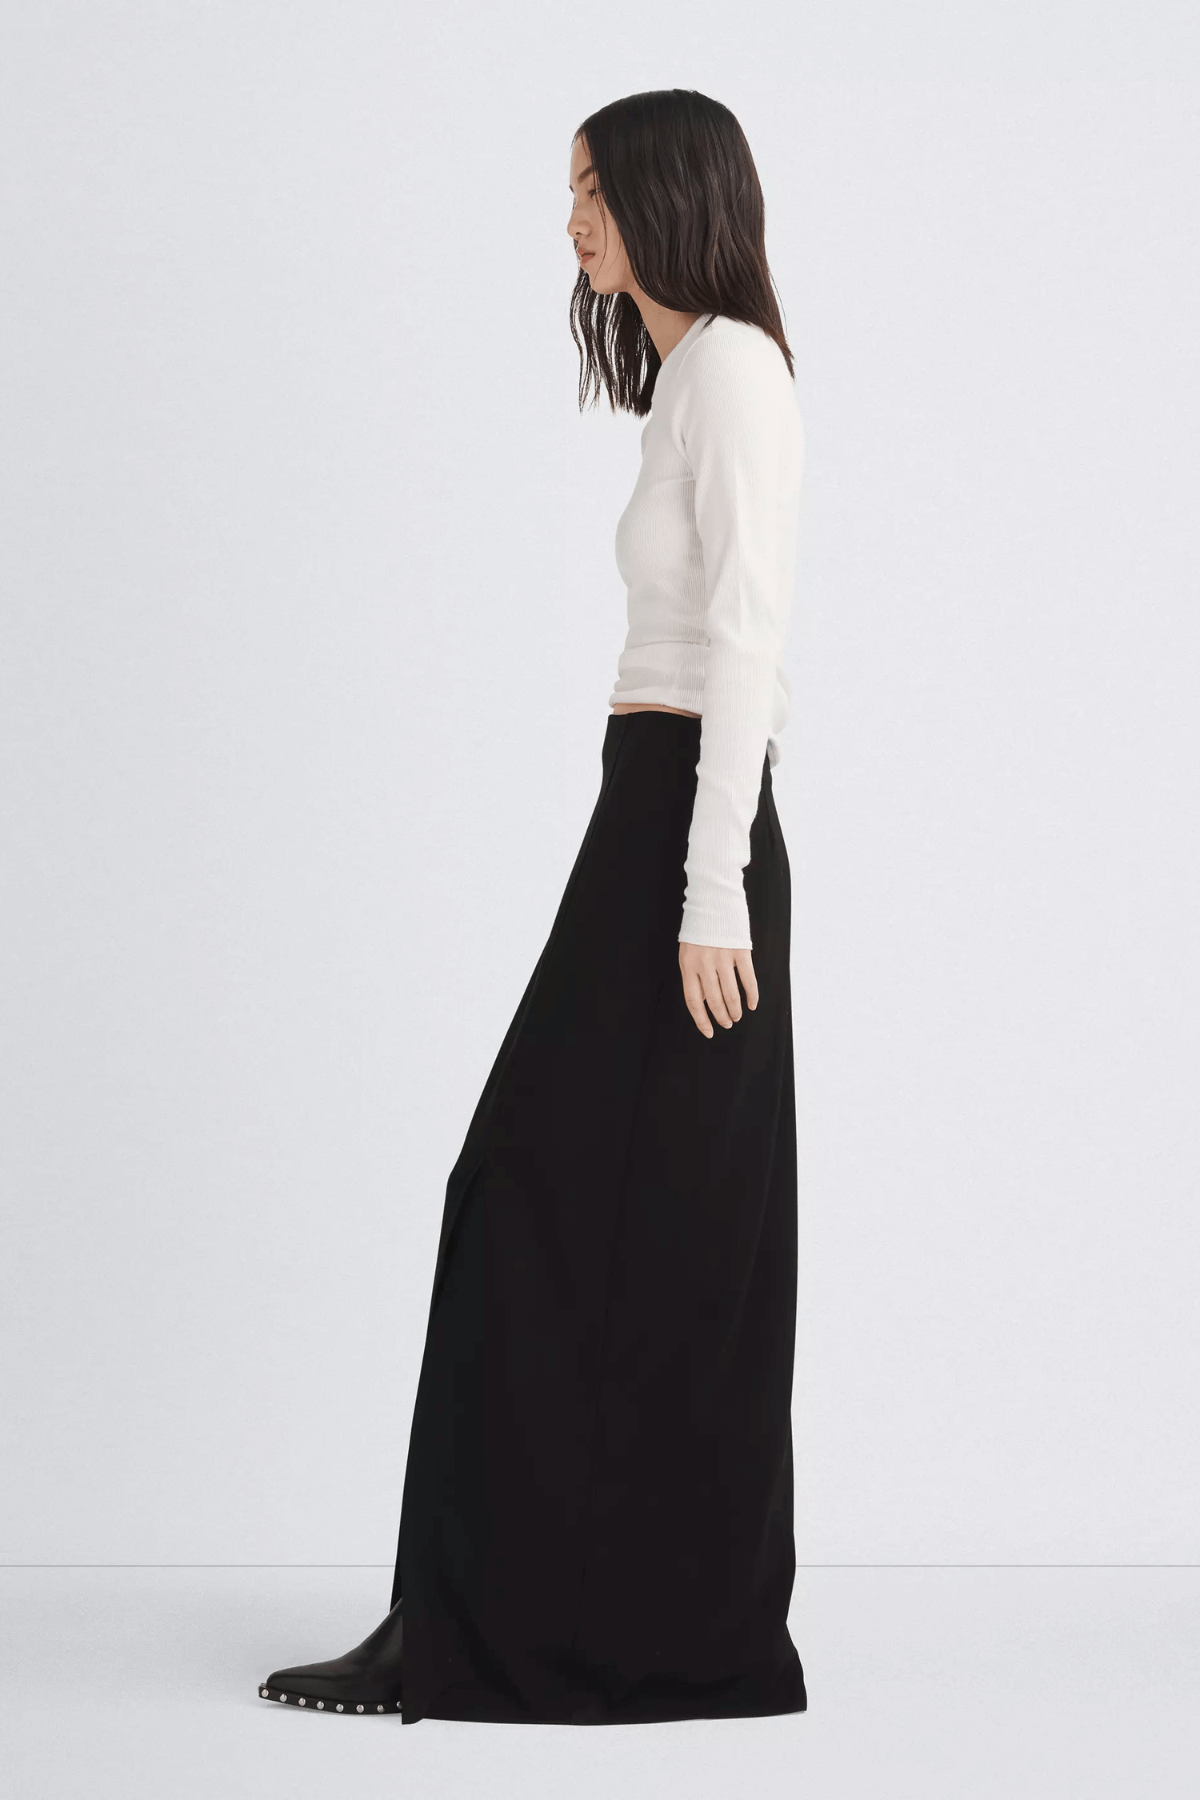 Rag & Bone Ilana Japanese Crepe Skirt - Black